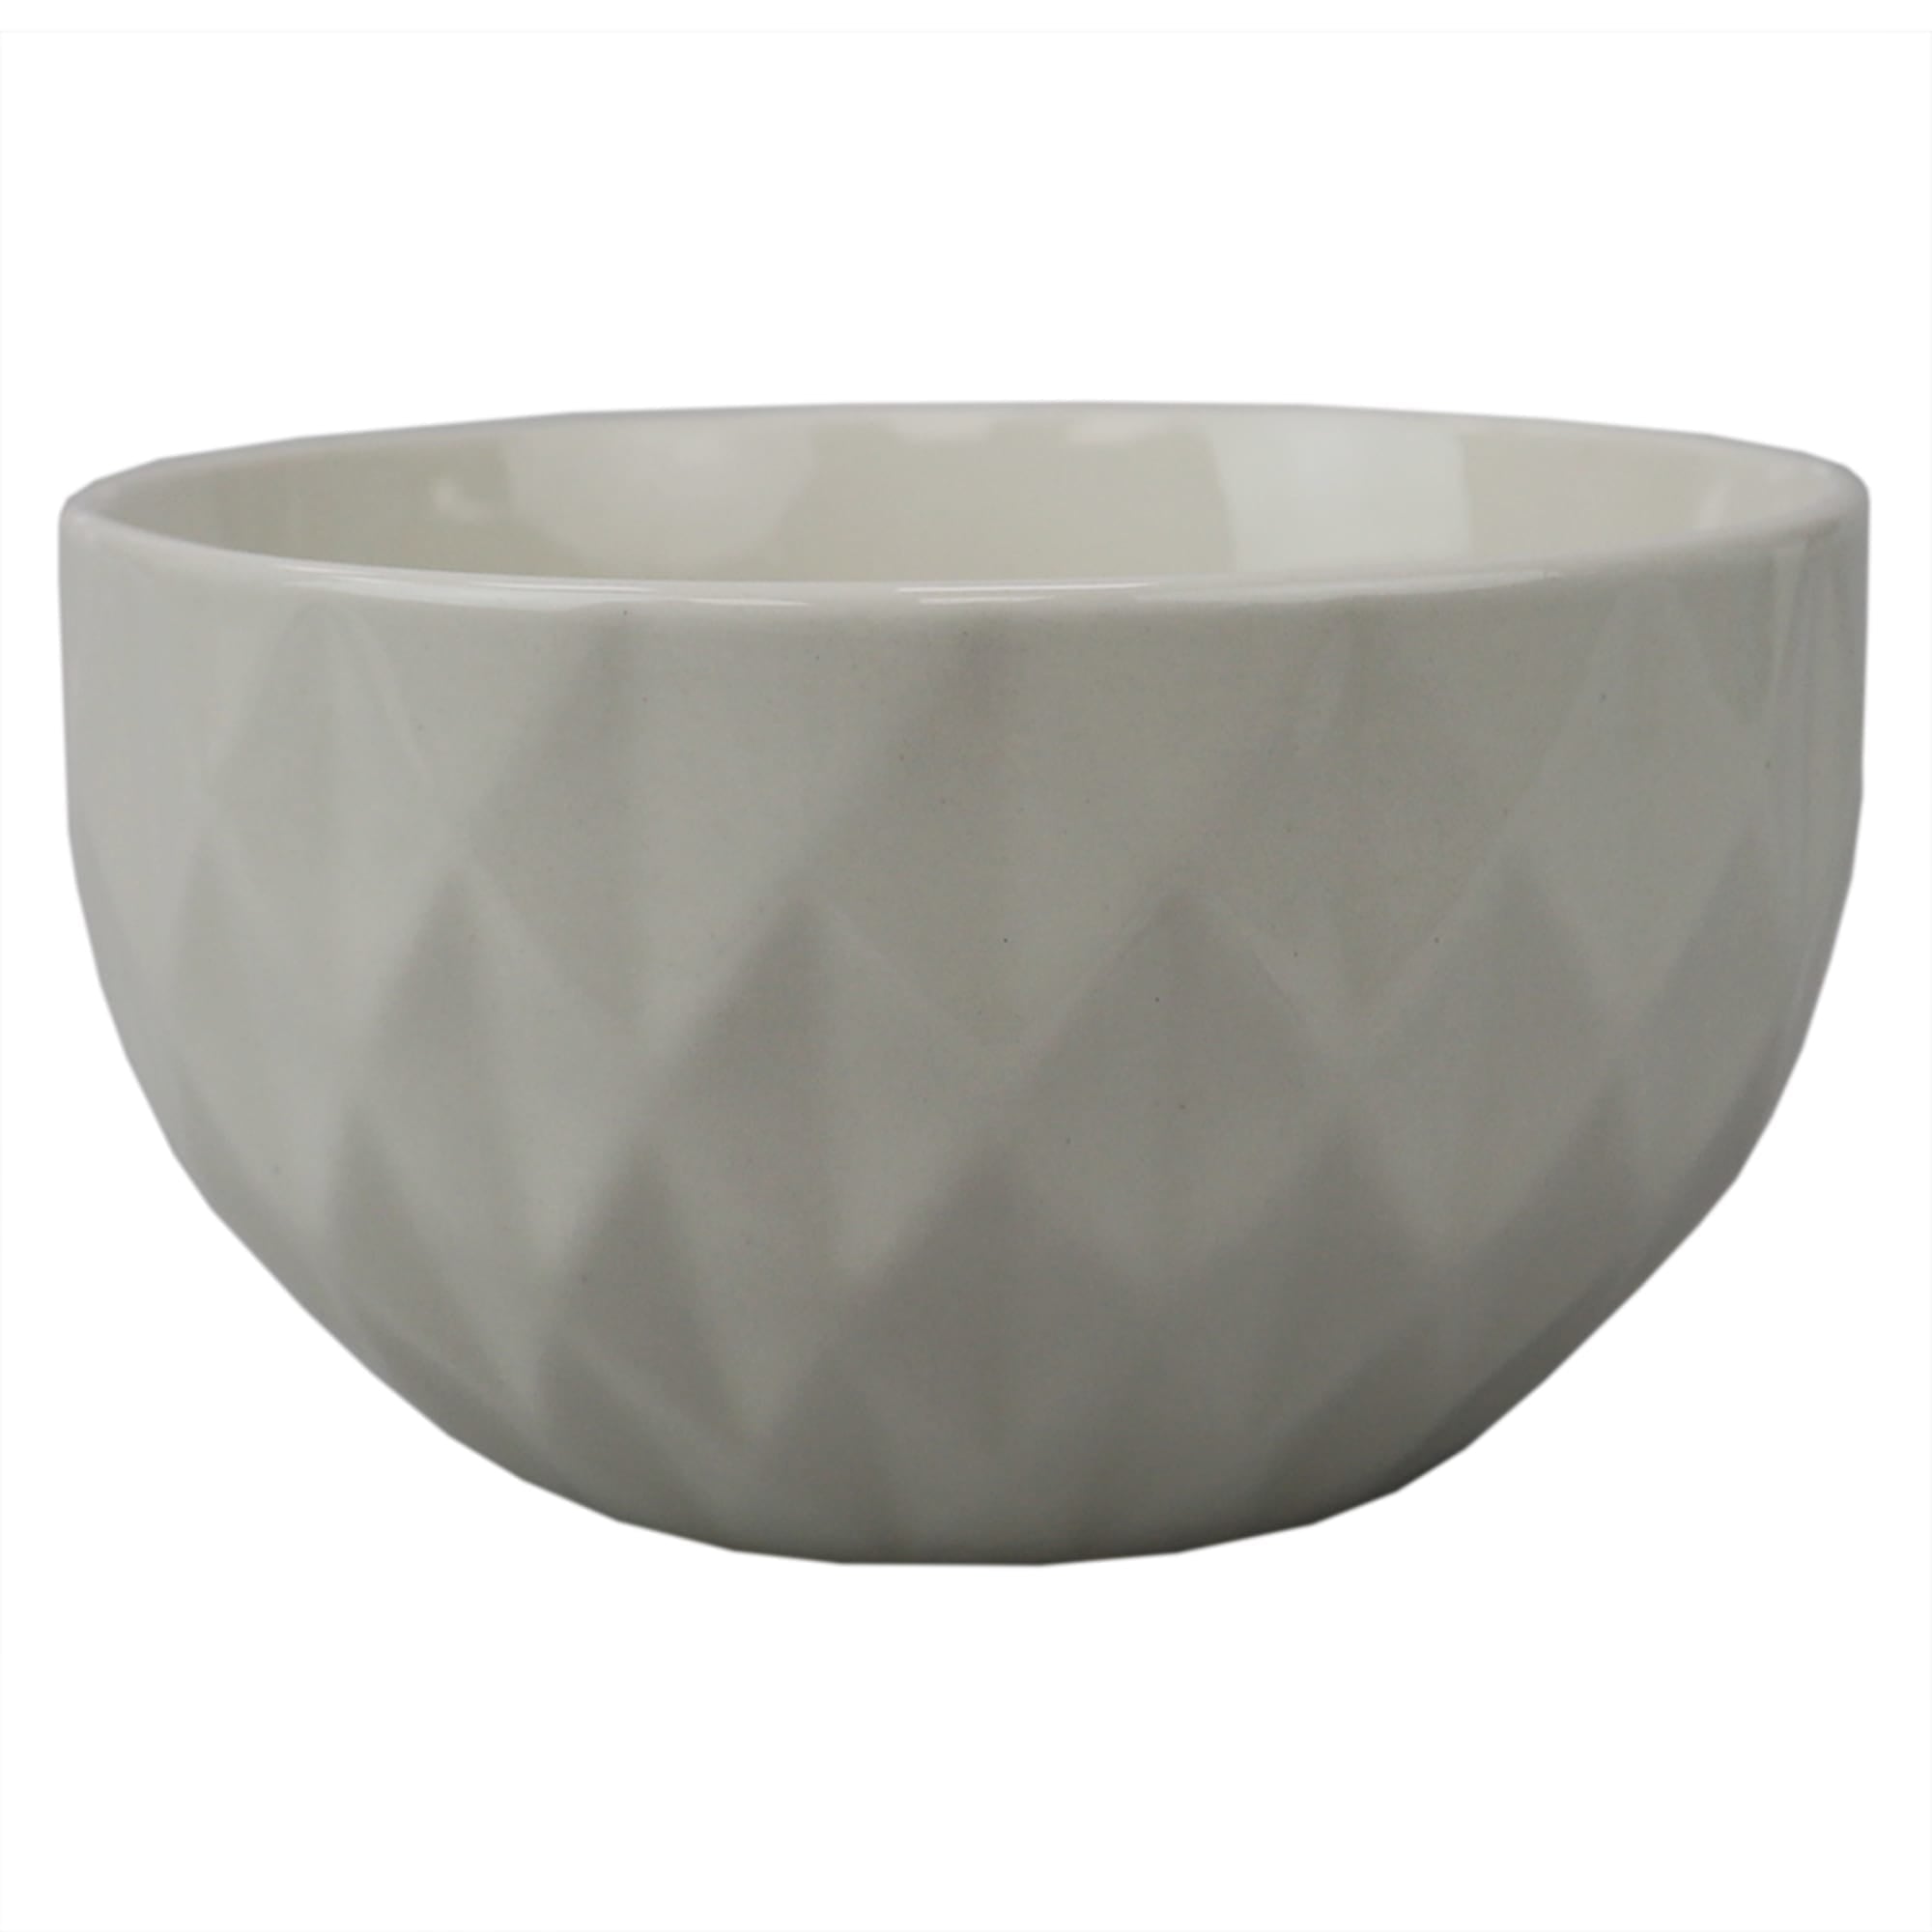 Home Basics Embossed Circle  7" Ceramic Bowl, White $2.00 EACH, CASE PACK OF 24